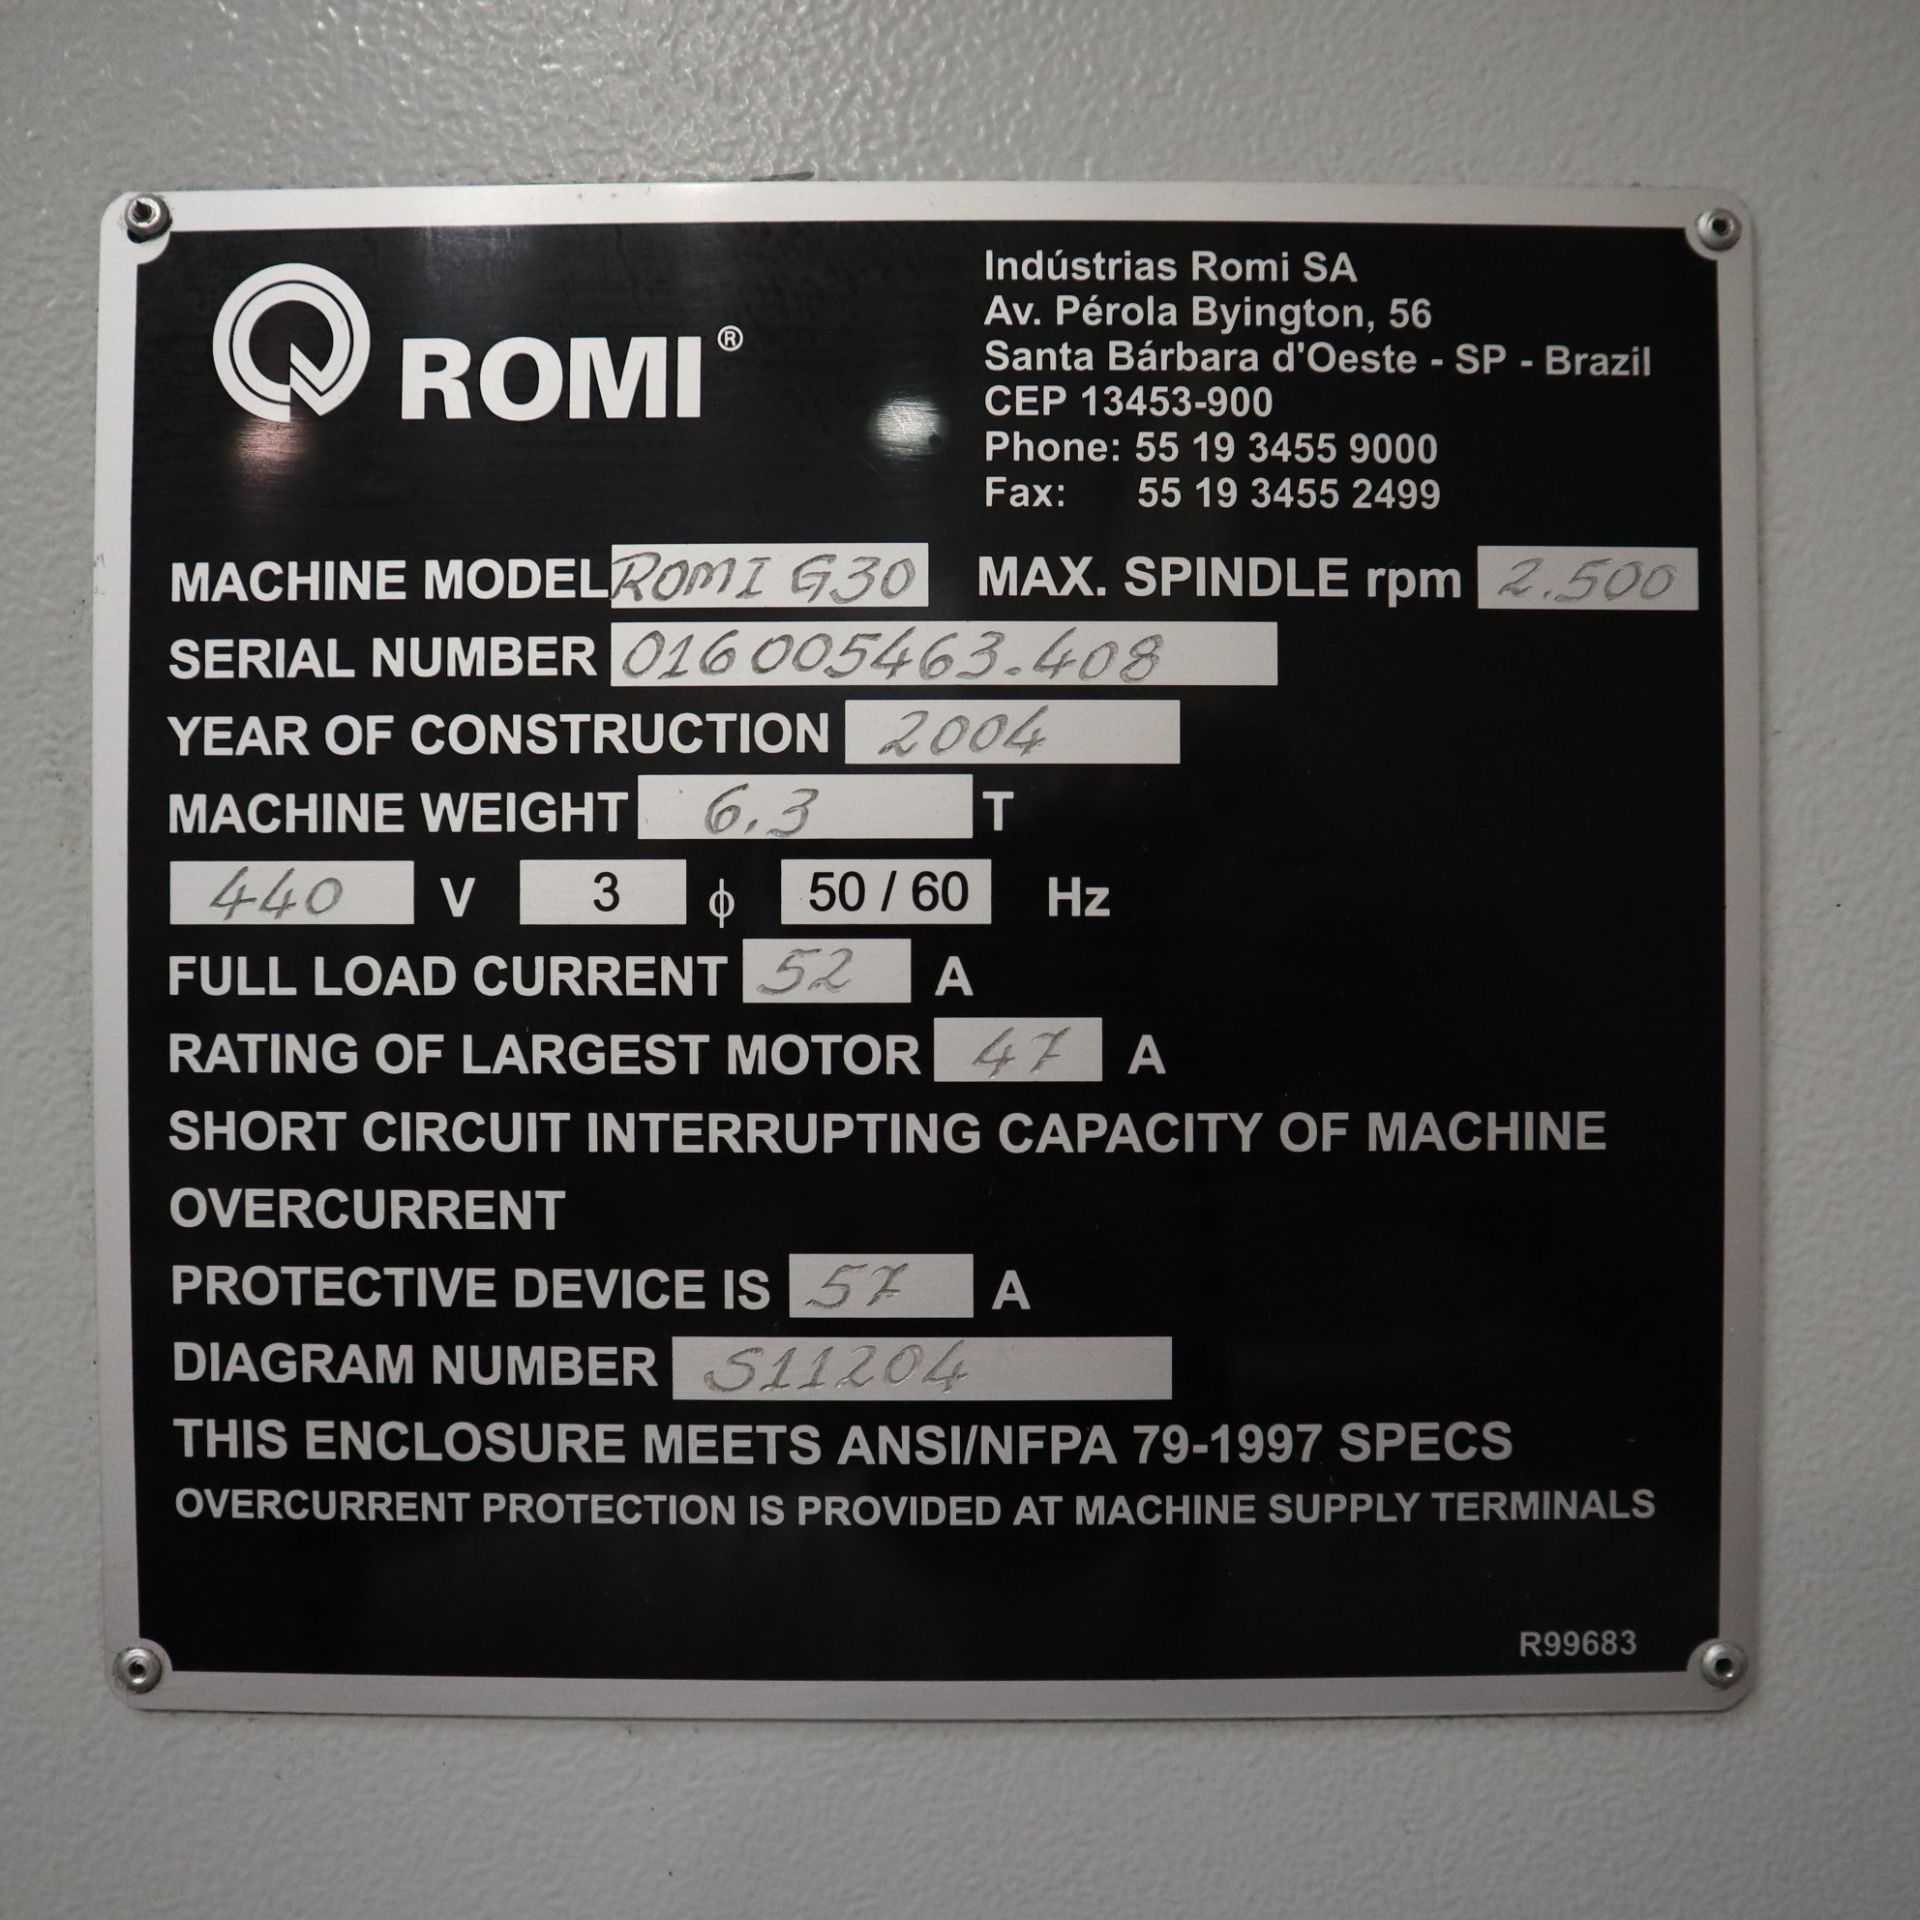 2004 ROMI G30 CNC LATHE, S/N 016005463.408, FANUC 21IT CONTROL, 10” CHUCK, TAILSTOCK, 12 POSITION - Image 10 of 11